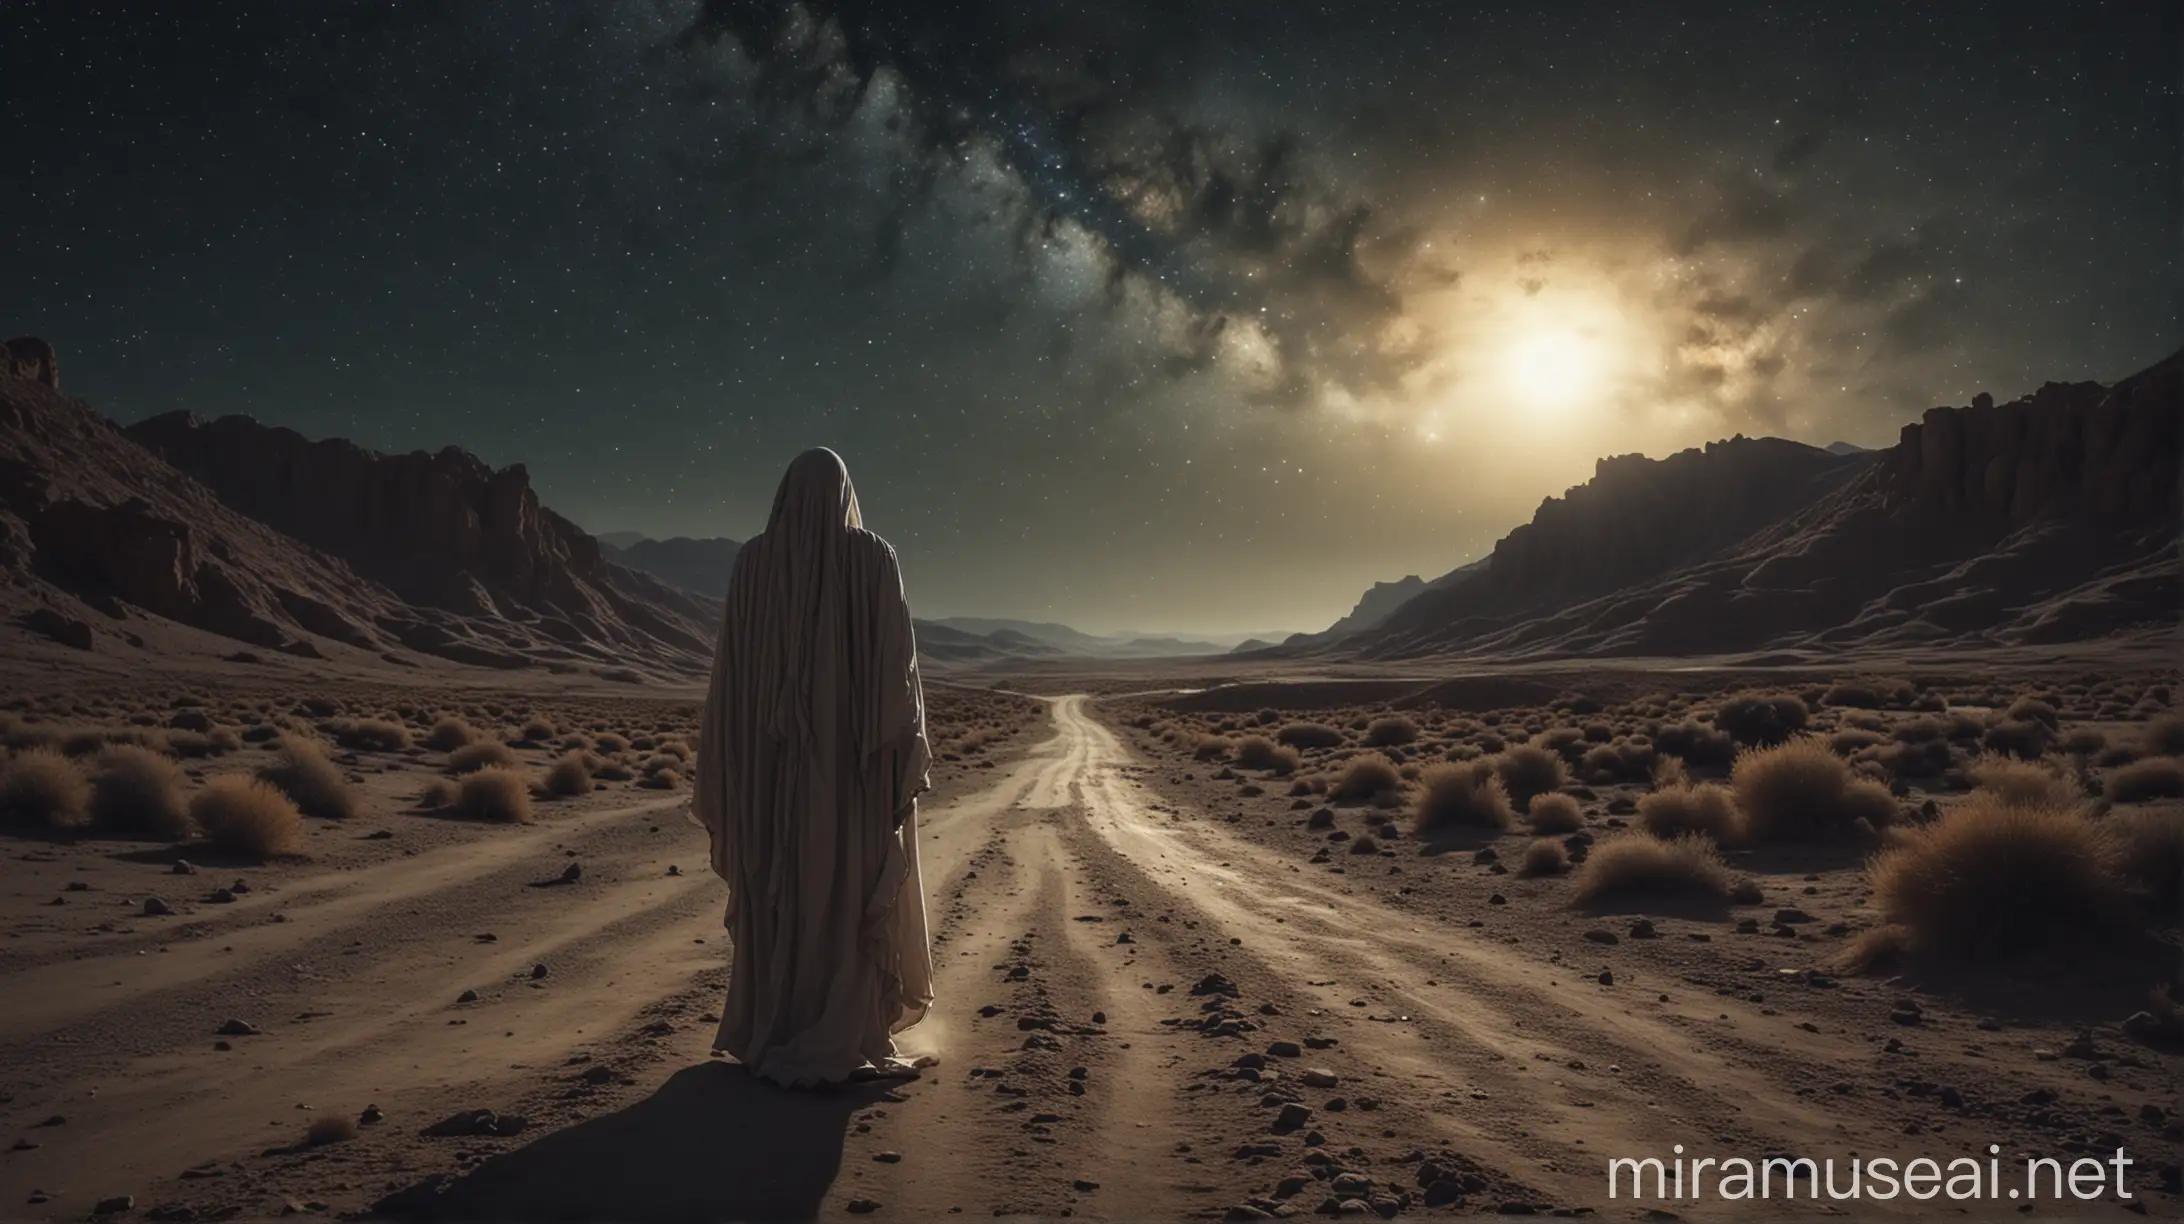 Spooky Desert Ghost Encounter in Iran at Night